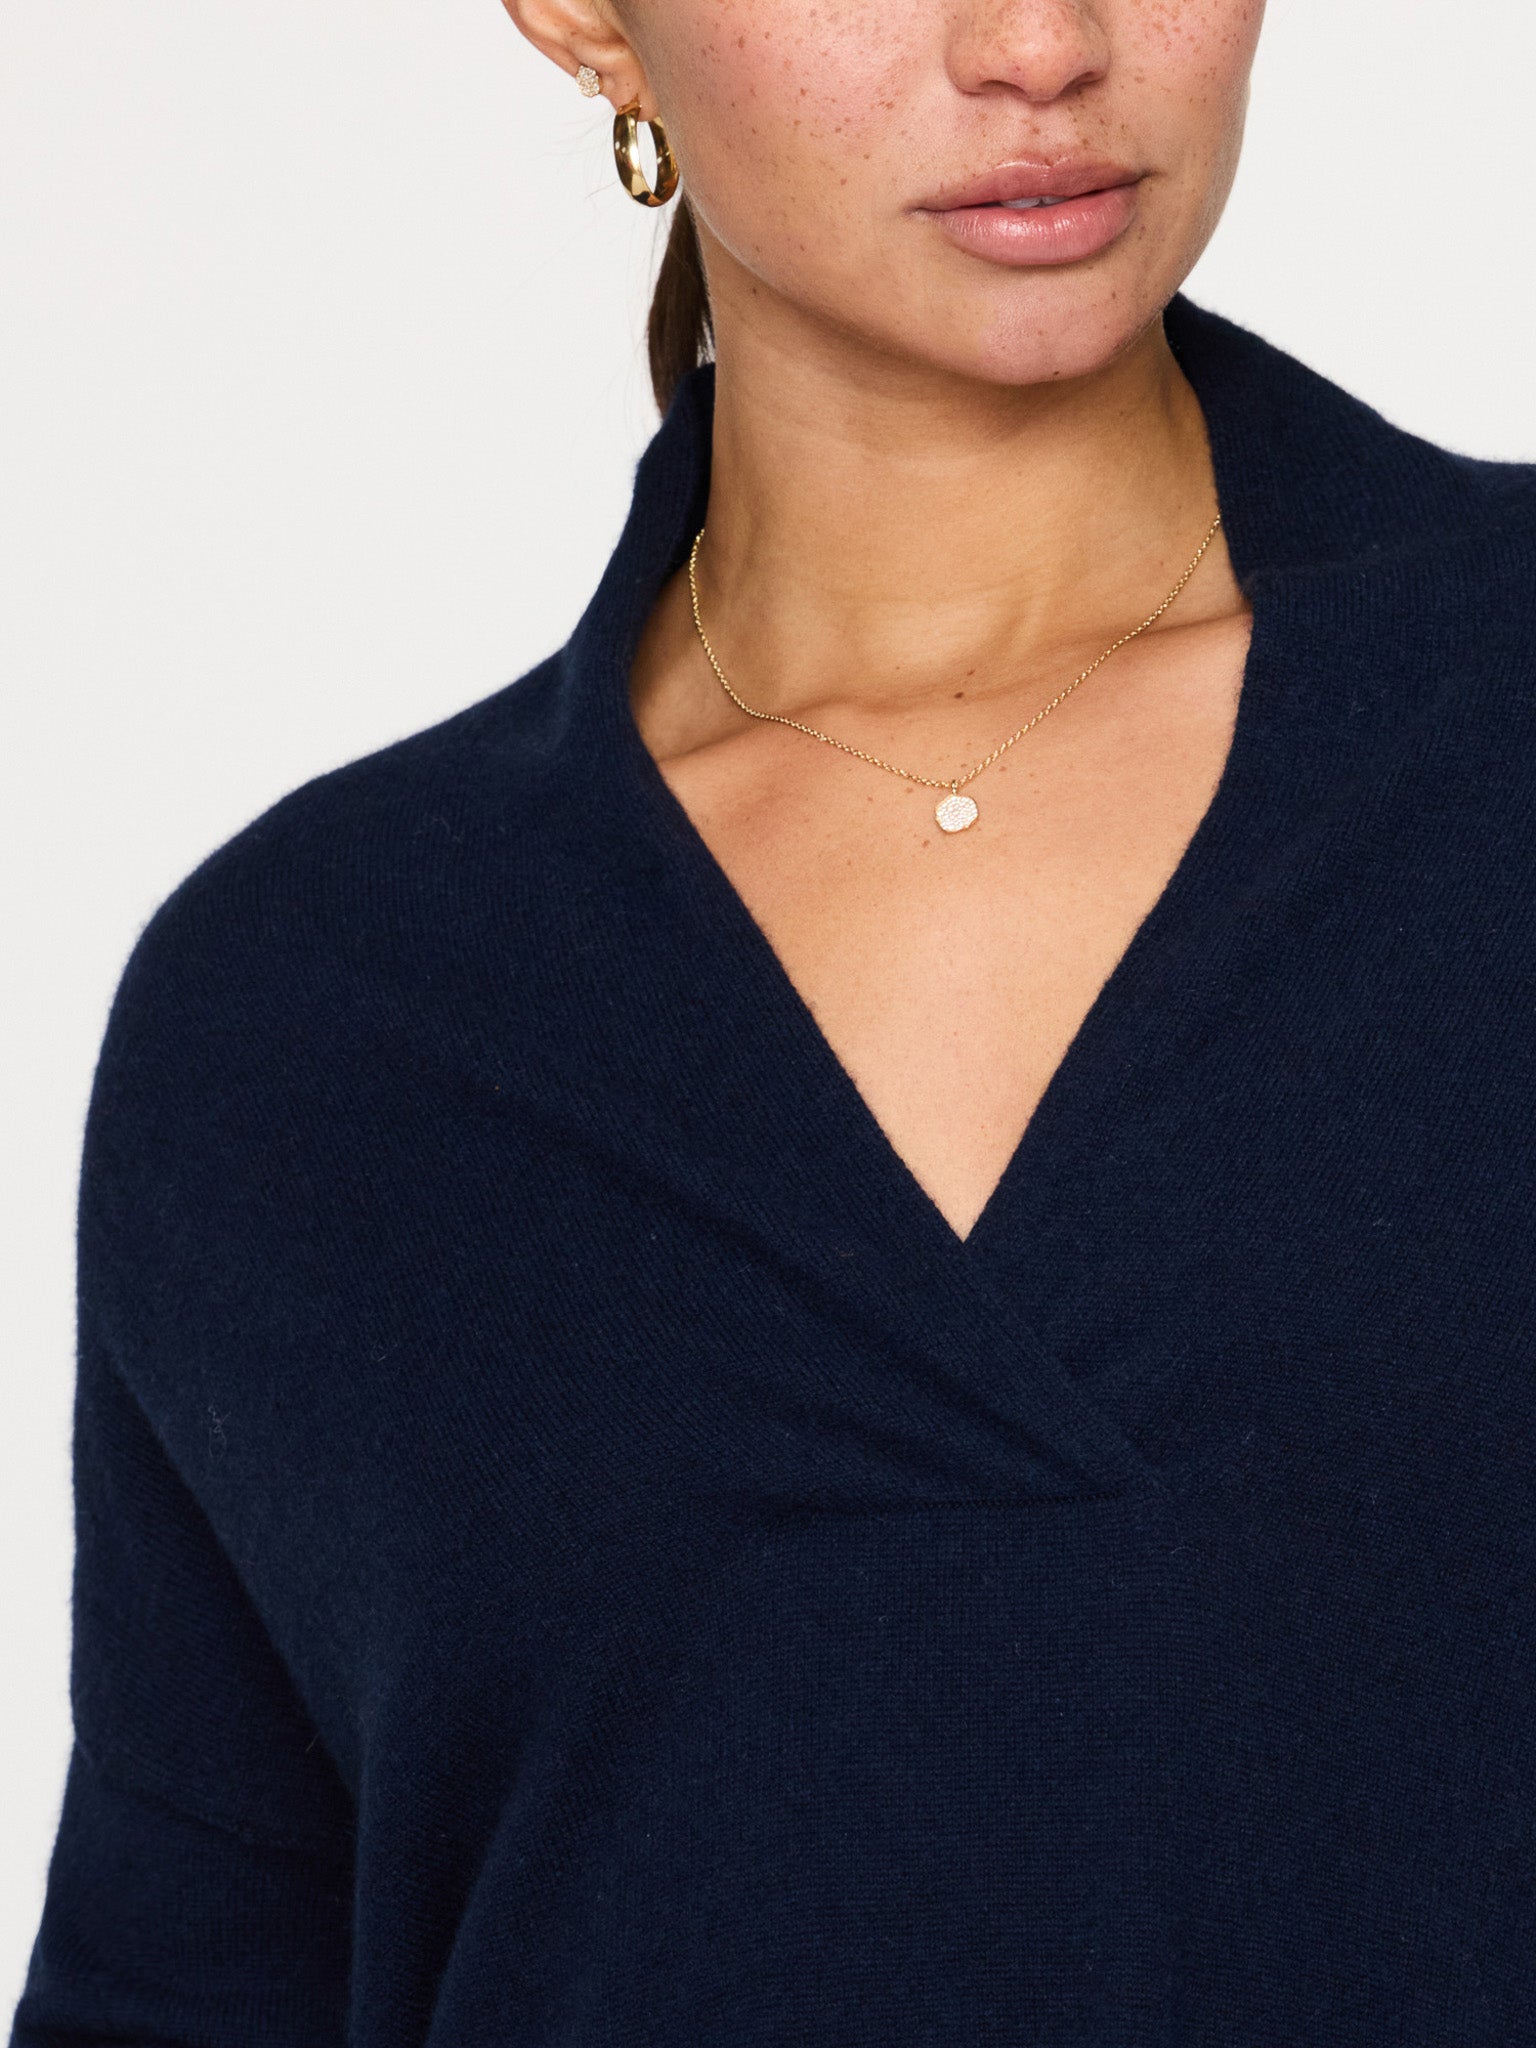 Siena v-neck pullover navy sweater close up